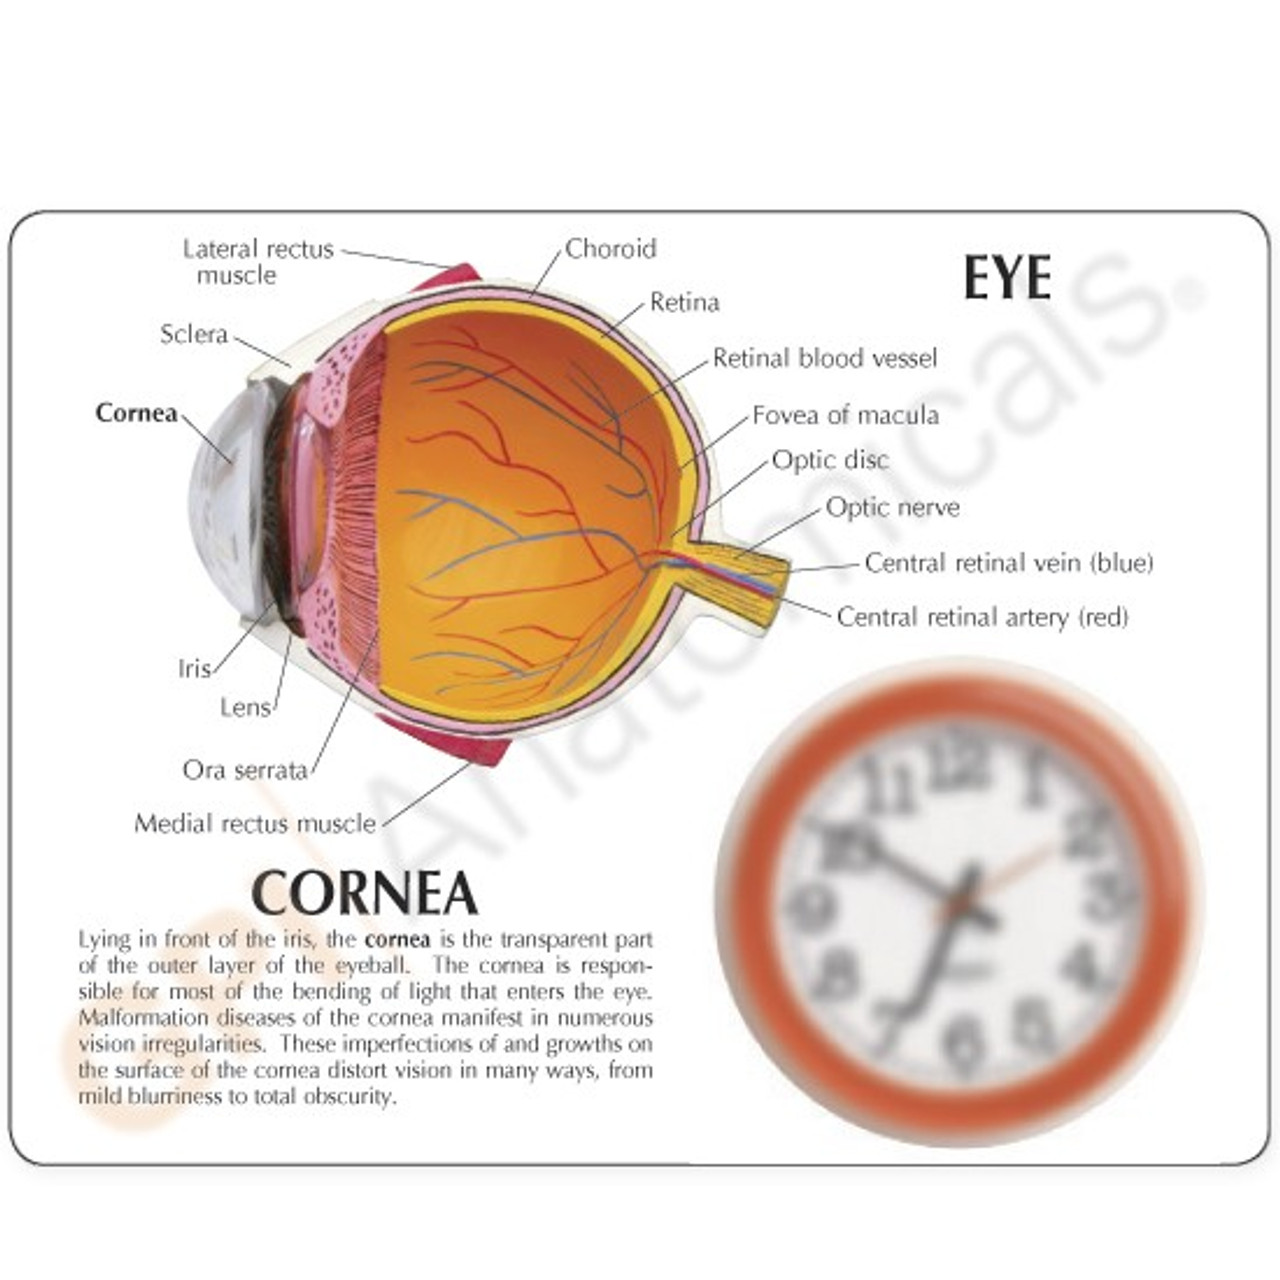 Cornea Eye Model Description Card